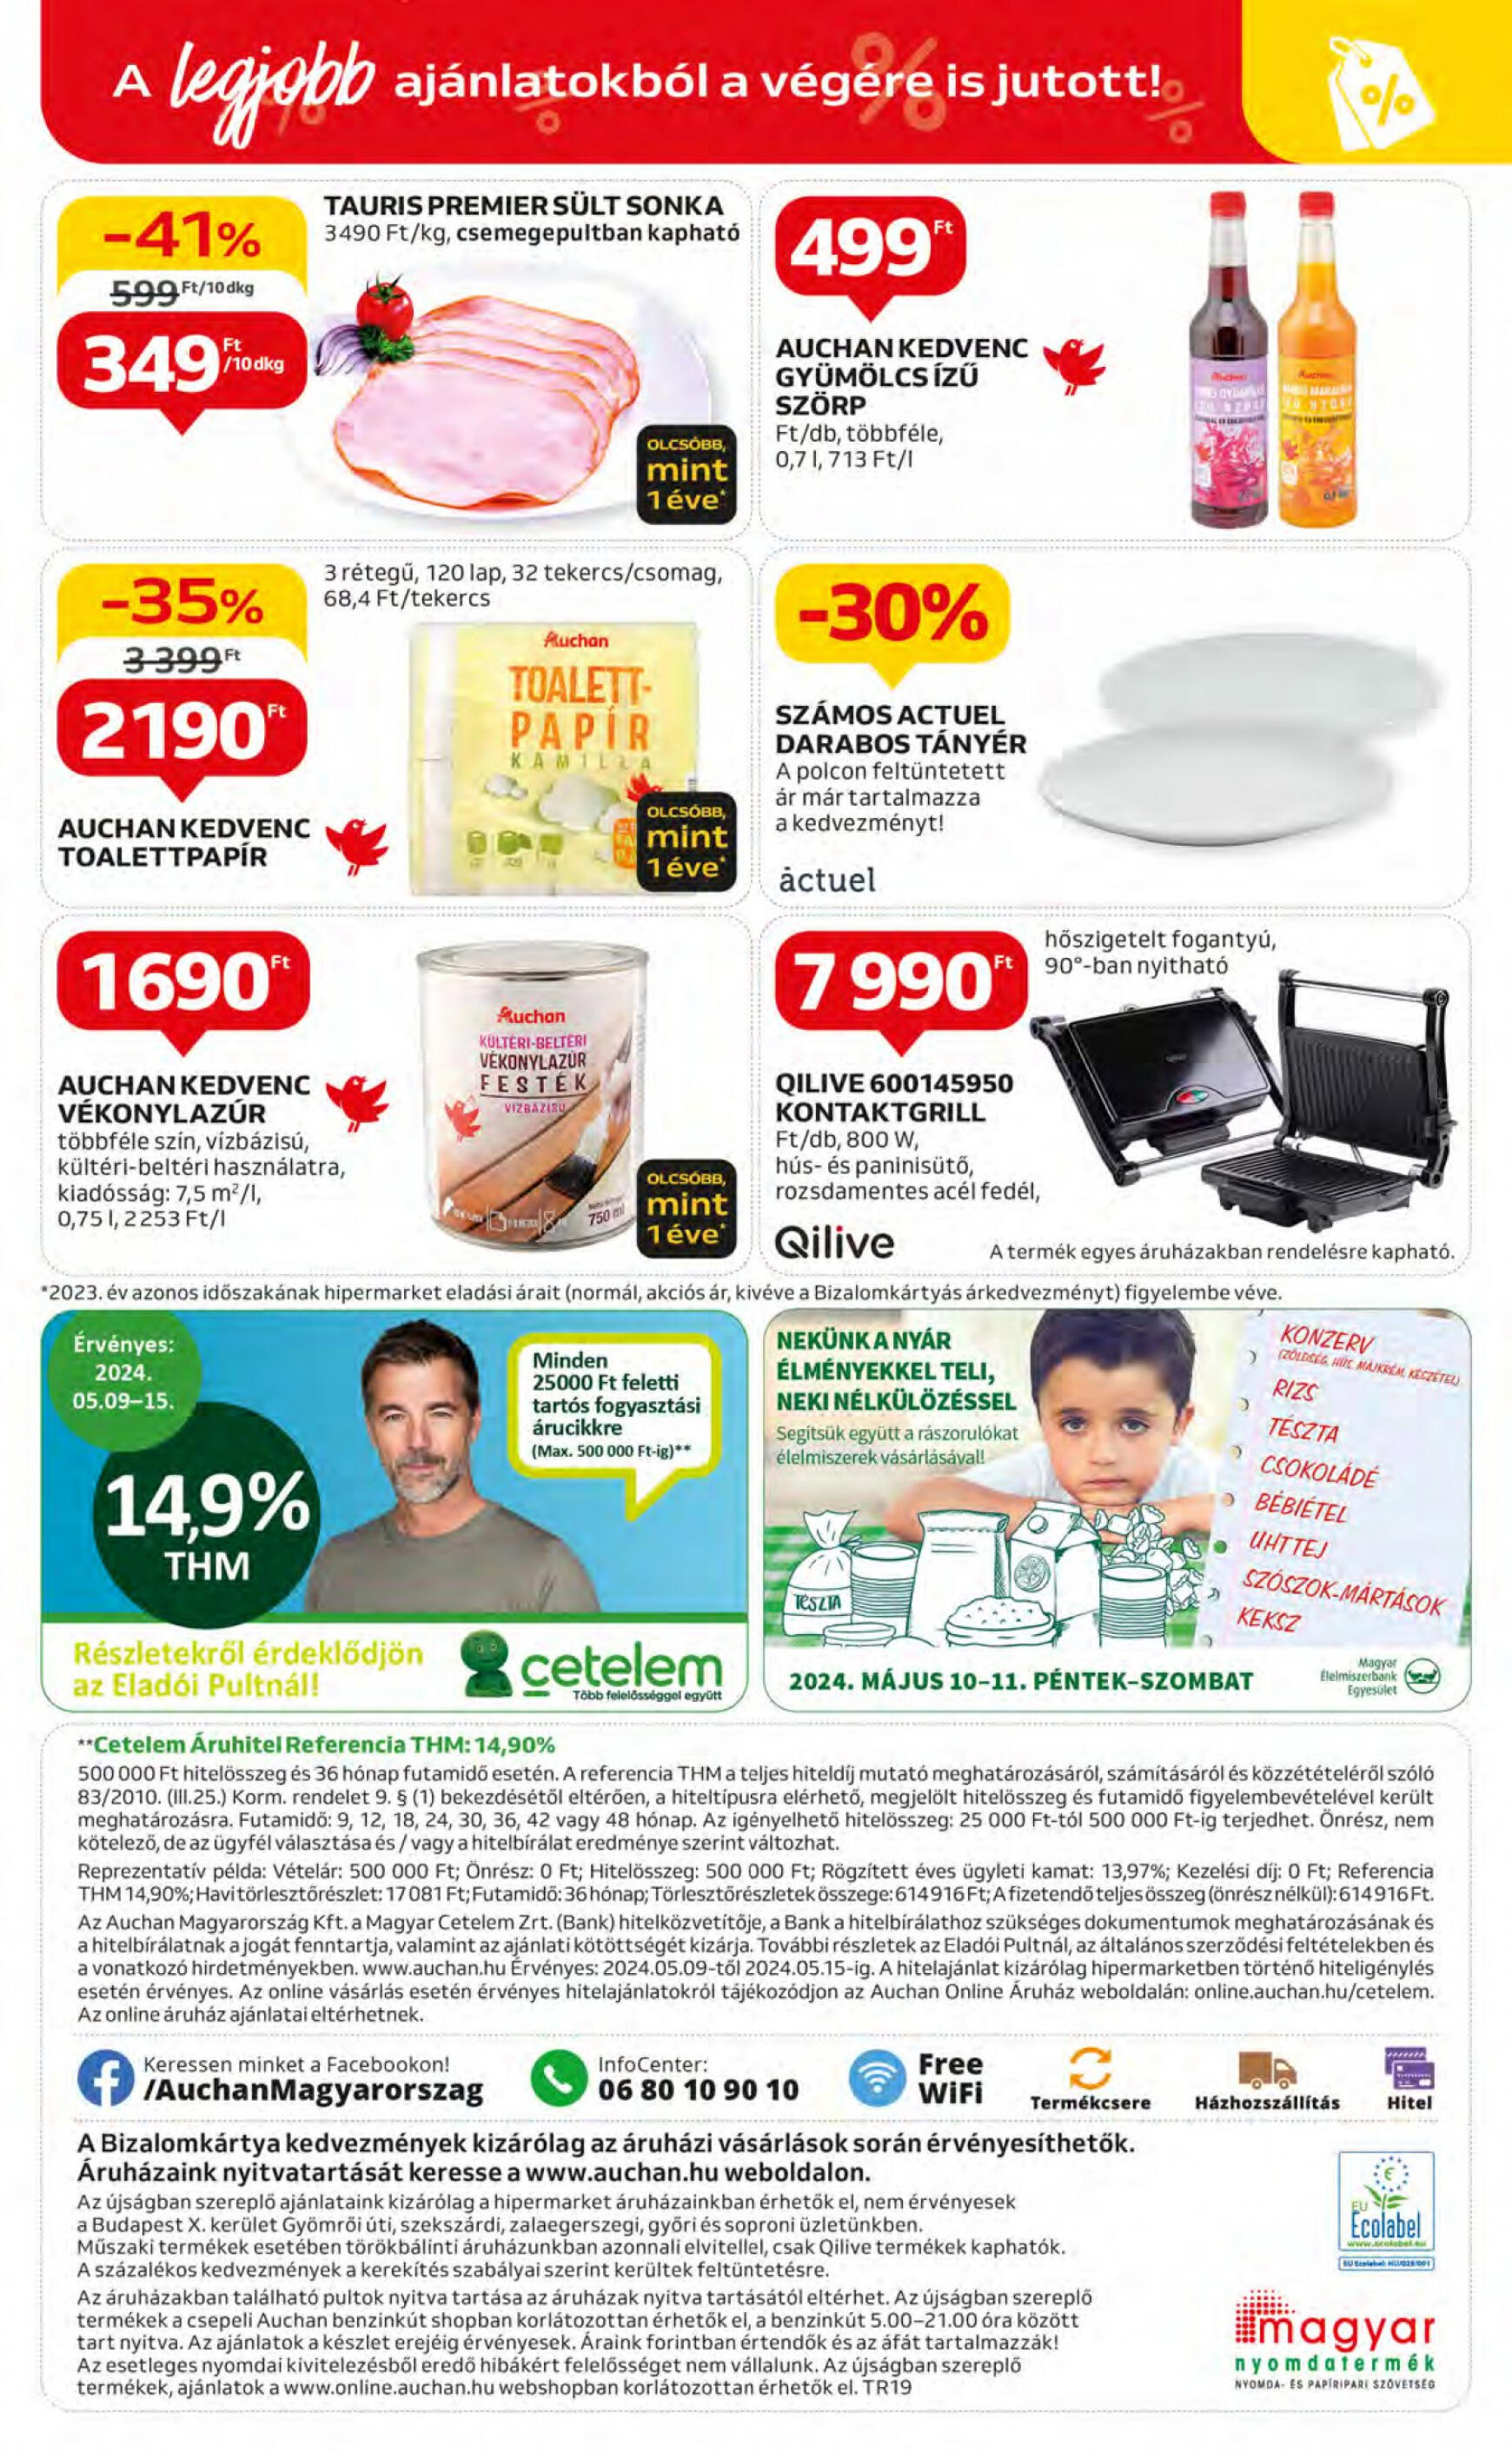 auchan - Aktuális újság Auchan 05.09. - 05.15. - page: 52